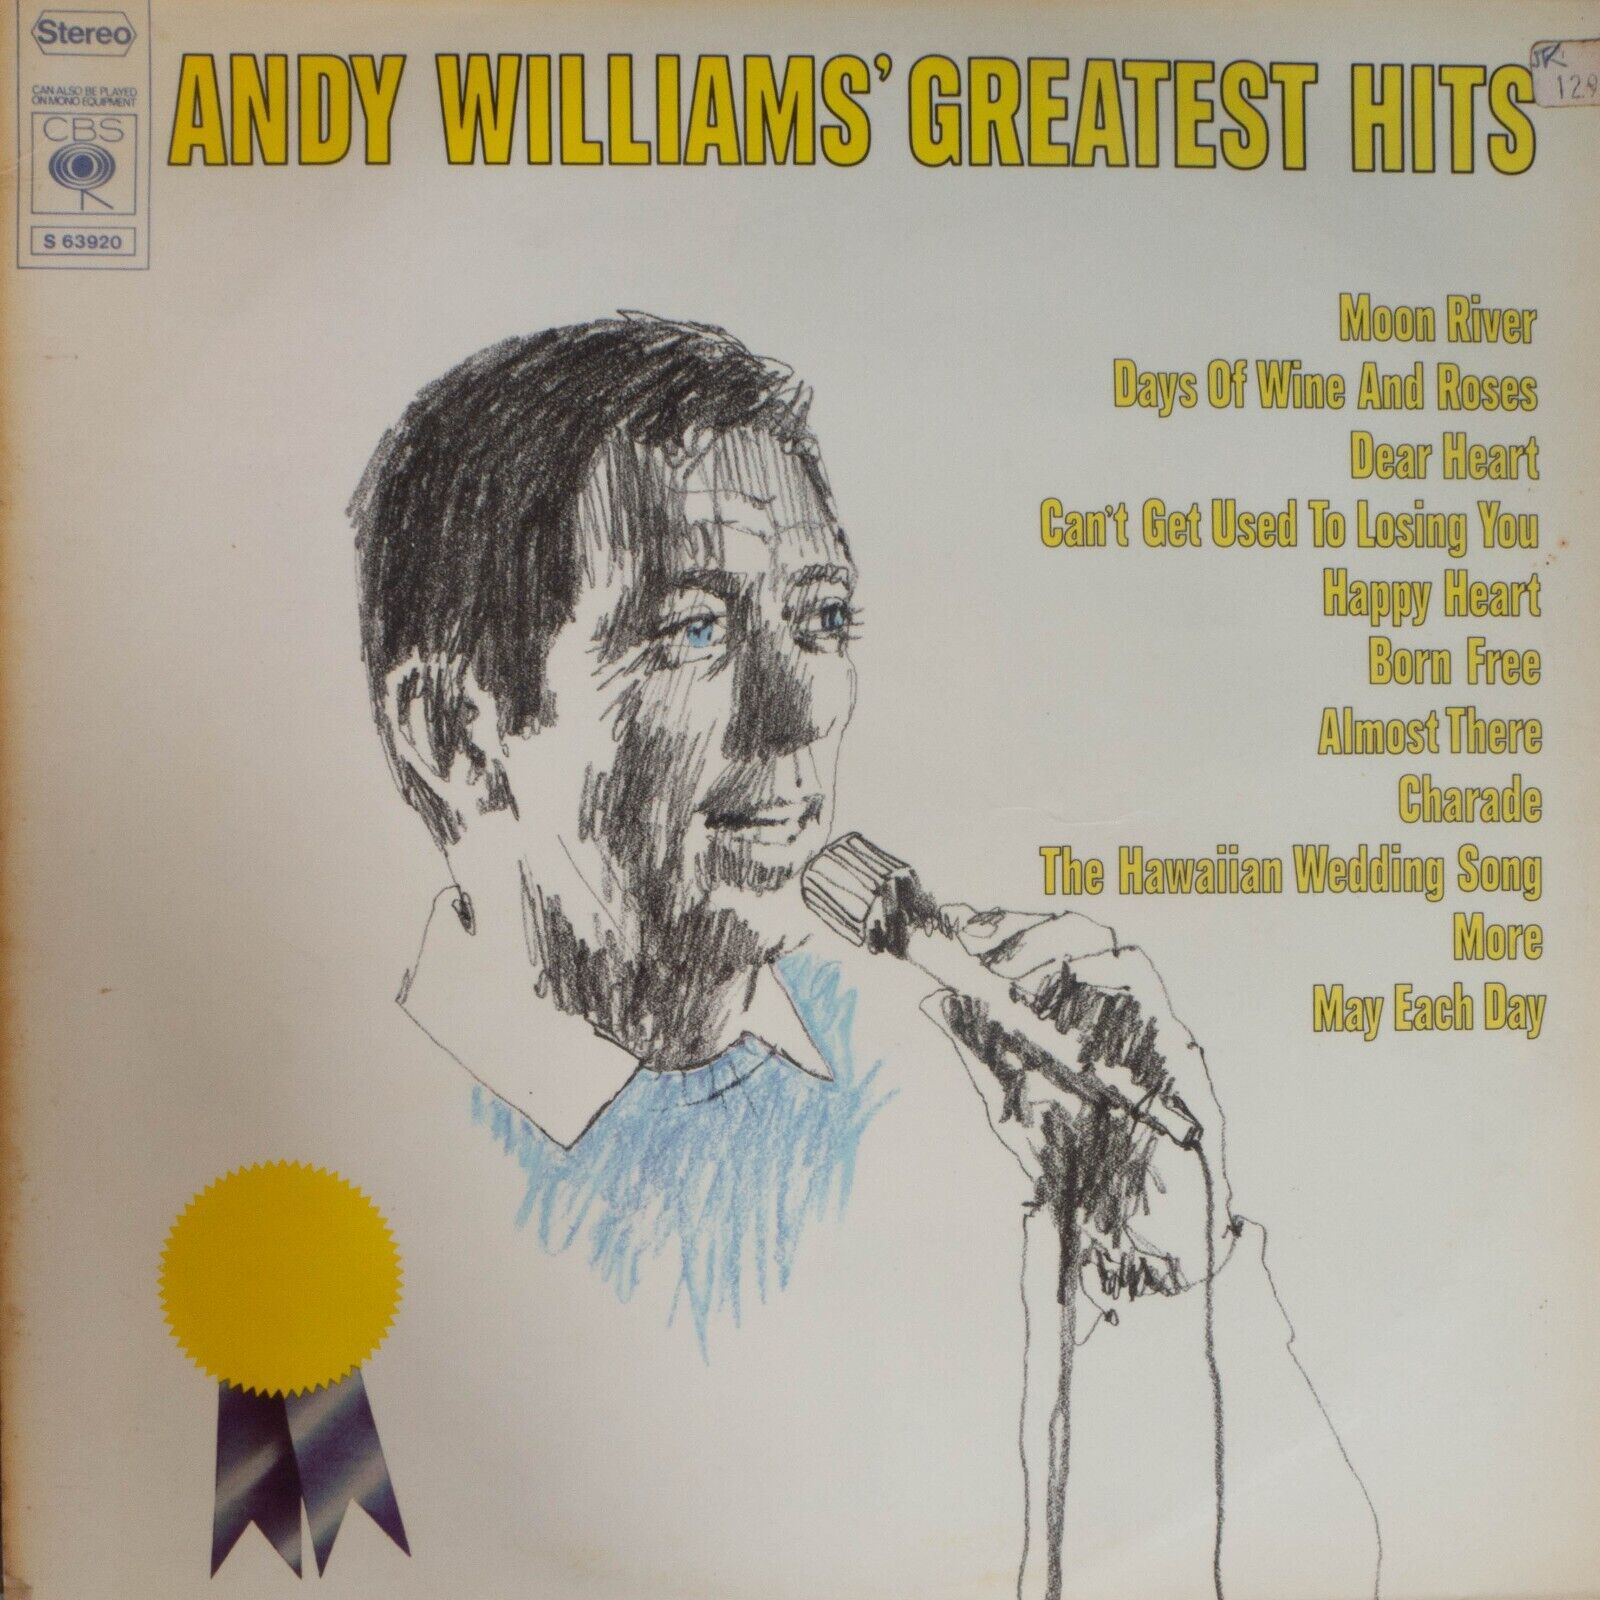 ANDY WILLIAMS - GREATEST HITS - Vinyl Record - HHR00831 VG